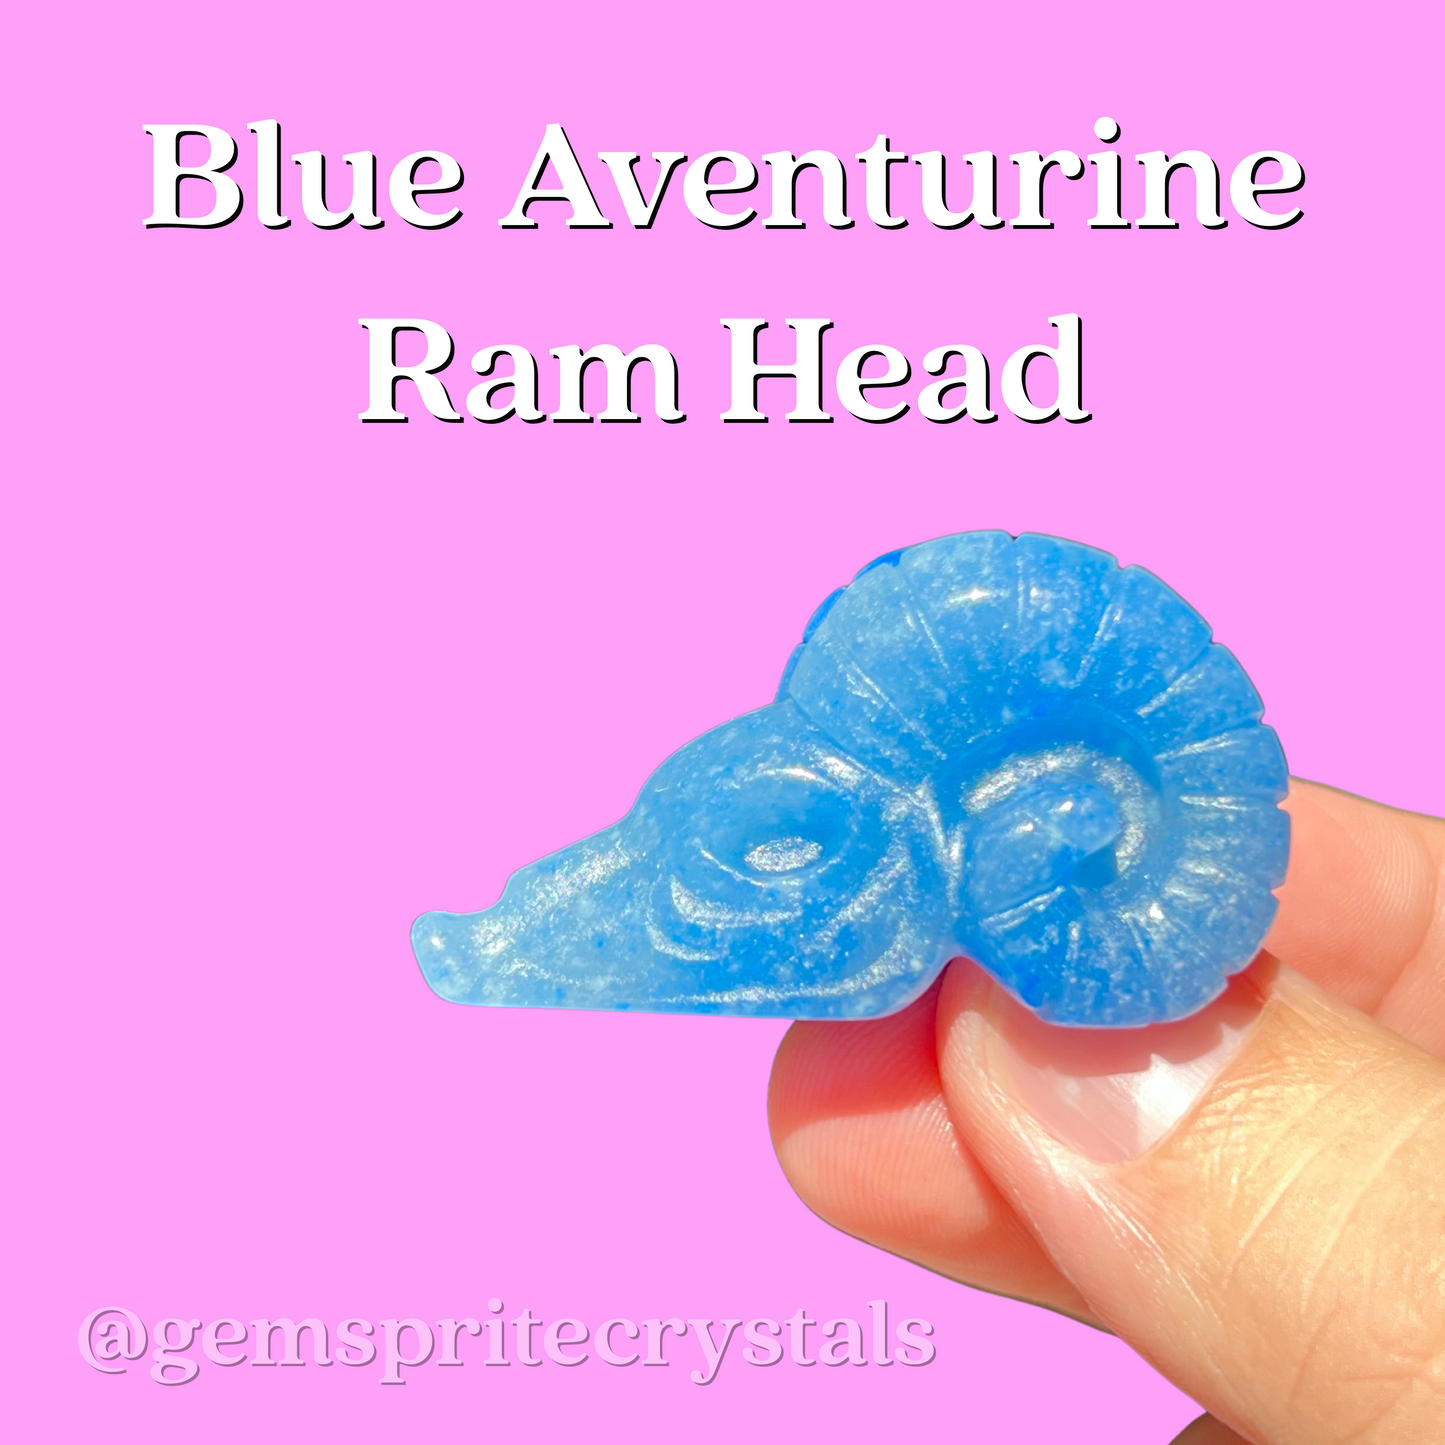 Blue Aventurine Ram Head